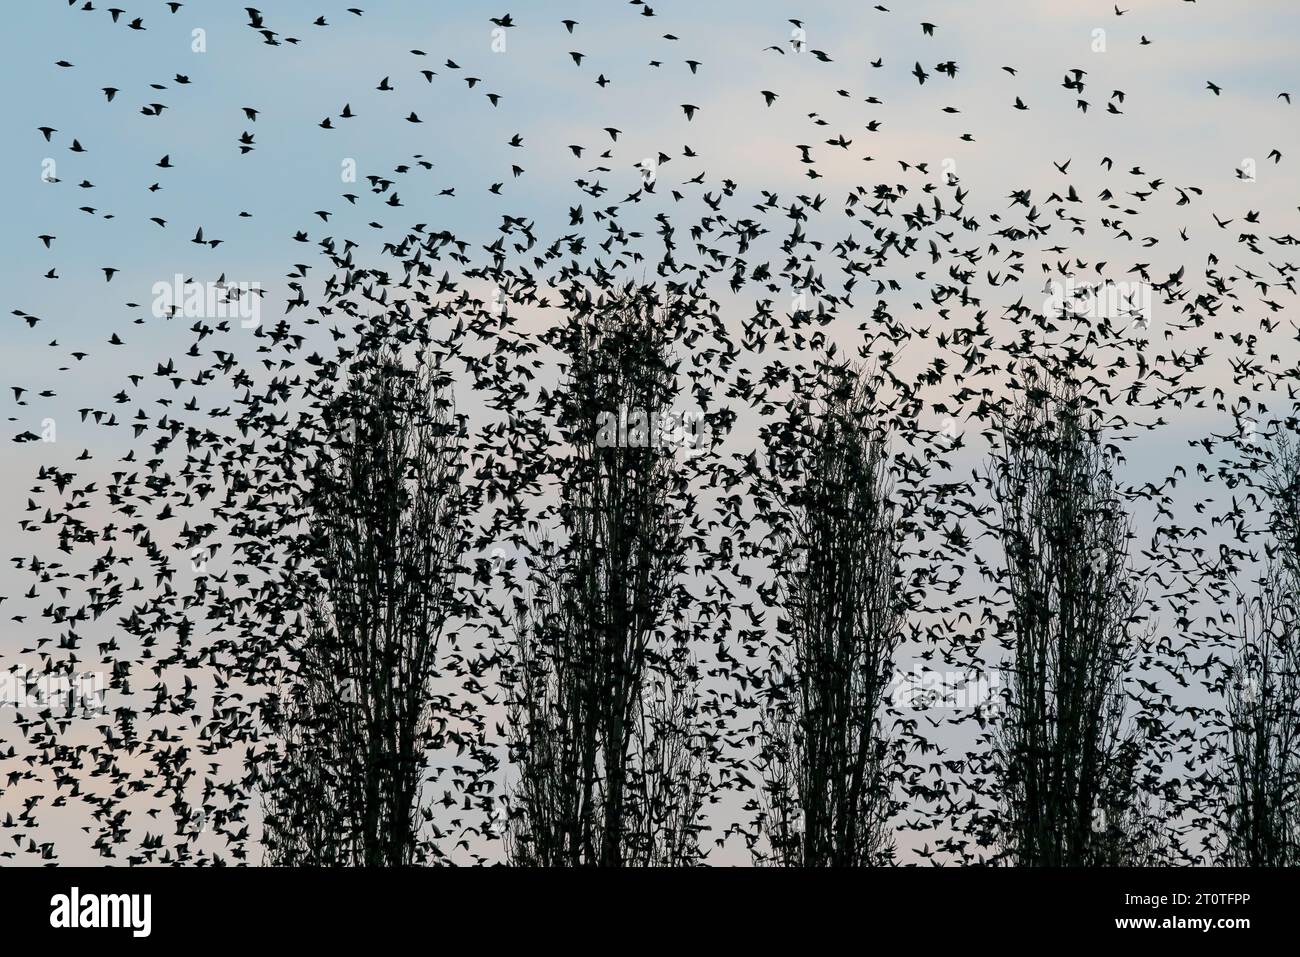 Many Starlings (Sturnus vulgaris) in a Tree. Flock of starlings birds fly in the Netherlands. Starling murmurations. Stock Photo